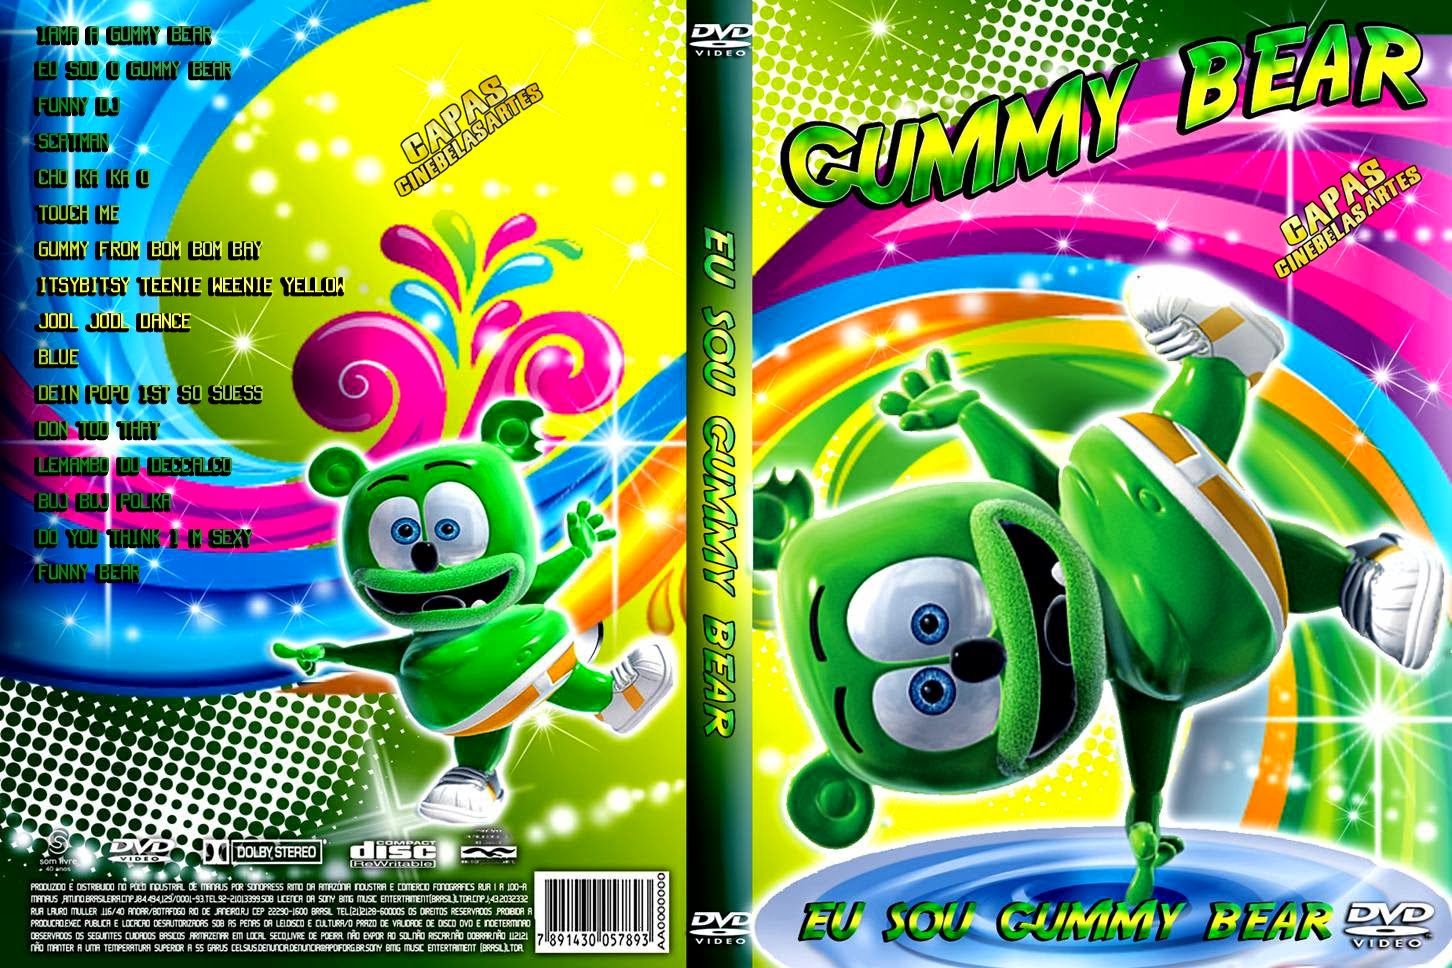 Gummy bear текст. Gummy Bear DVD. DVD диск Gummy Bear. The Gummy Bear диск. Gummy Bear DVD CD.